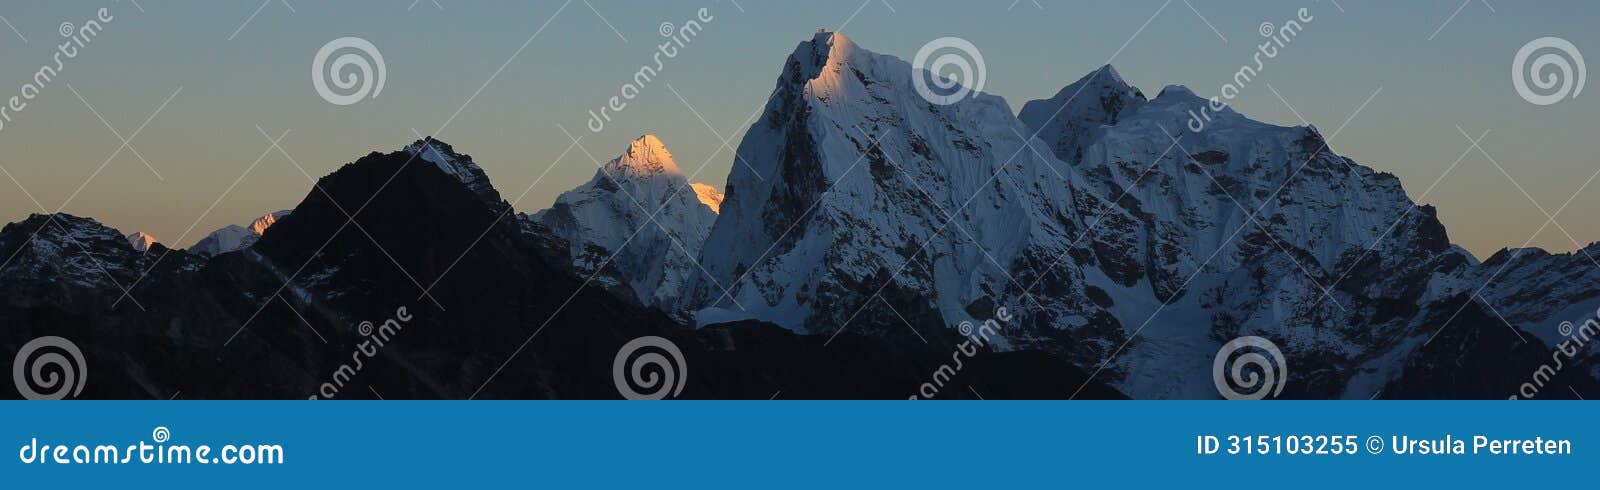 sun lit mountain peaks of ama dablam and cholatse at sunset